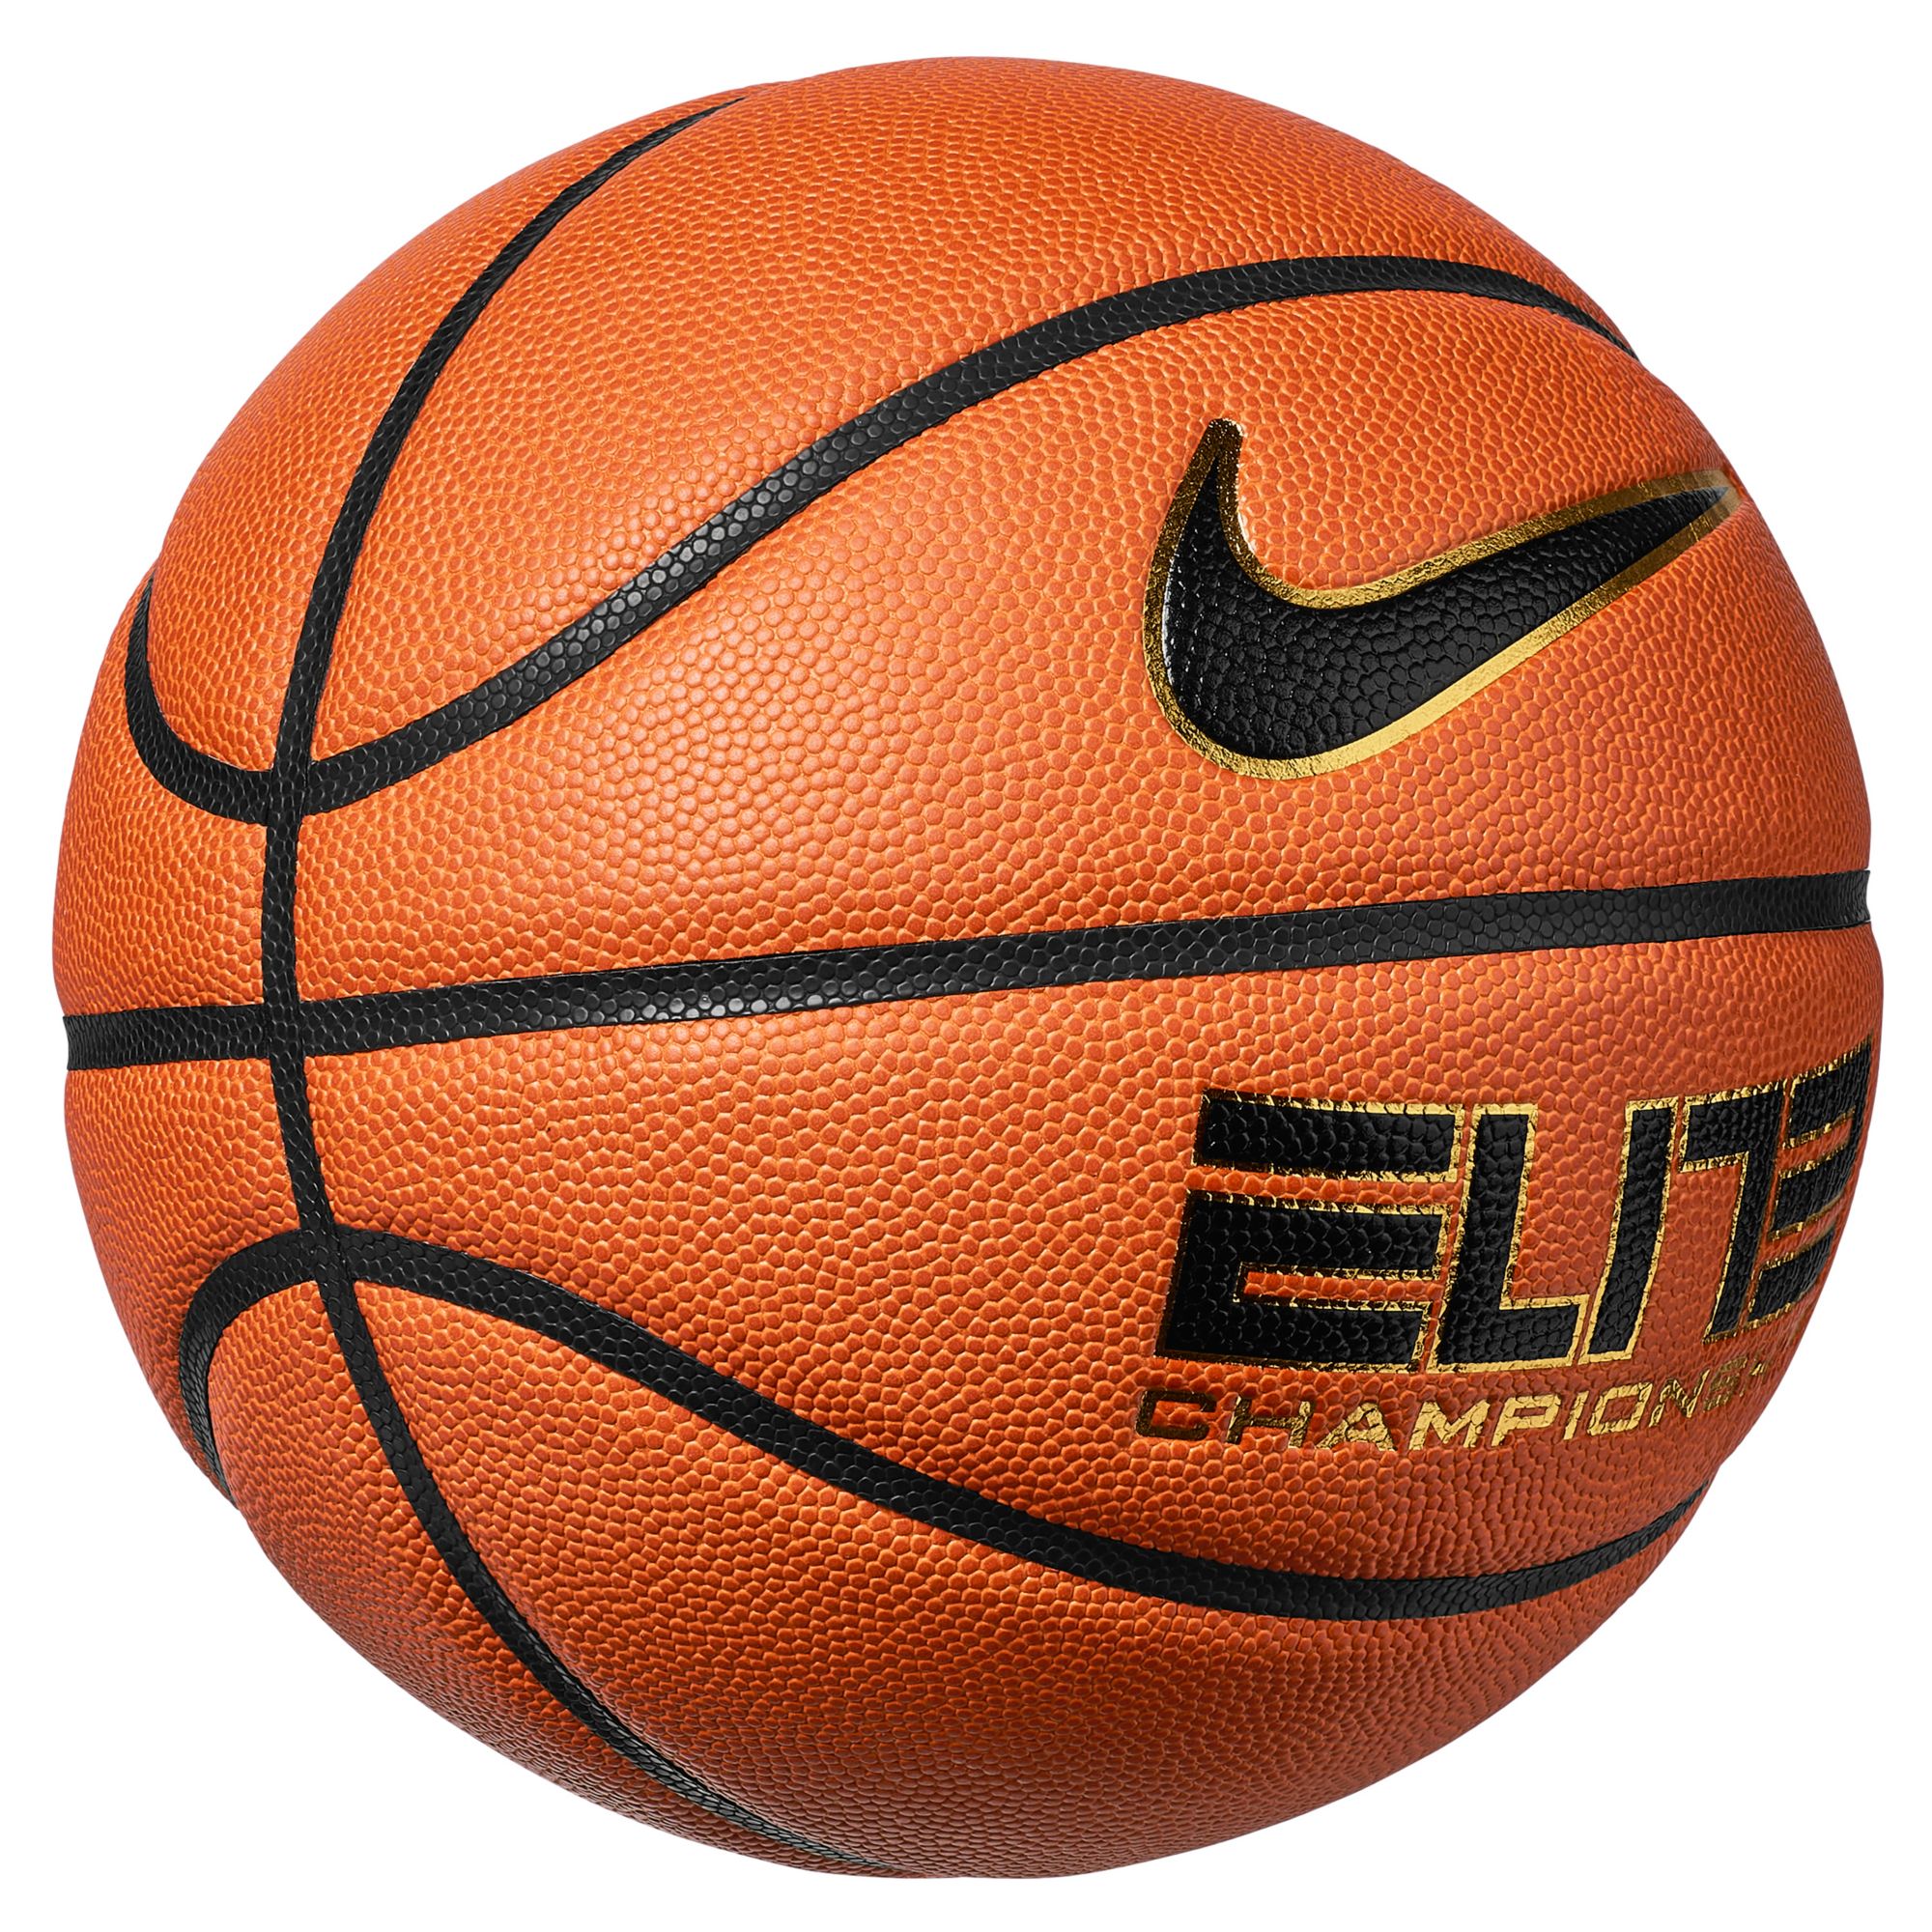 Nike Elite Championship 8P 2.0 Basketball NFHS Official Size